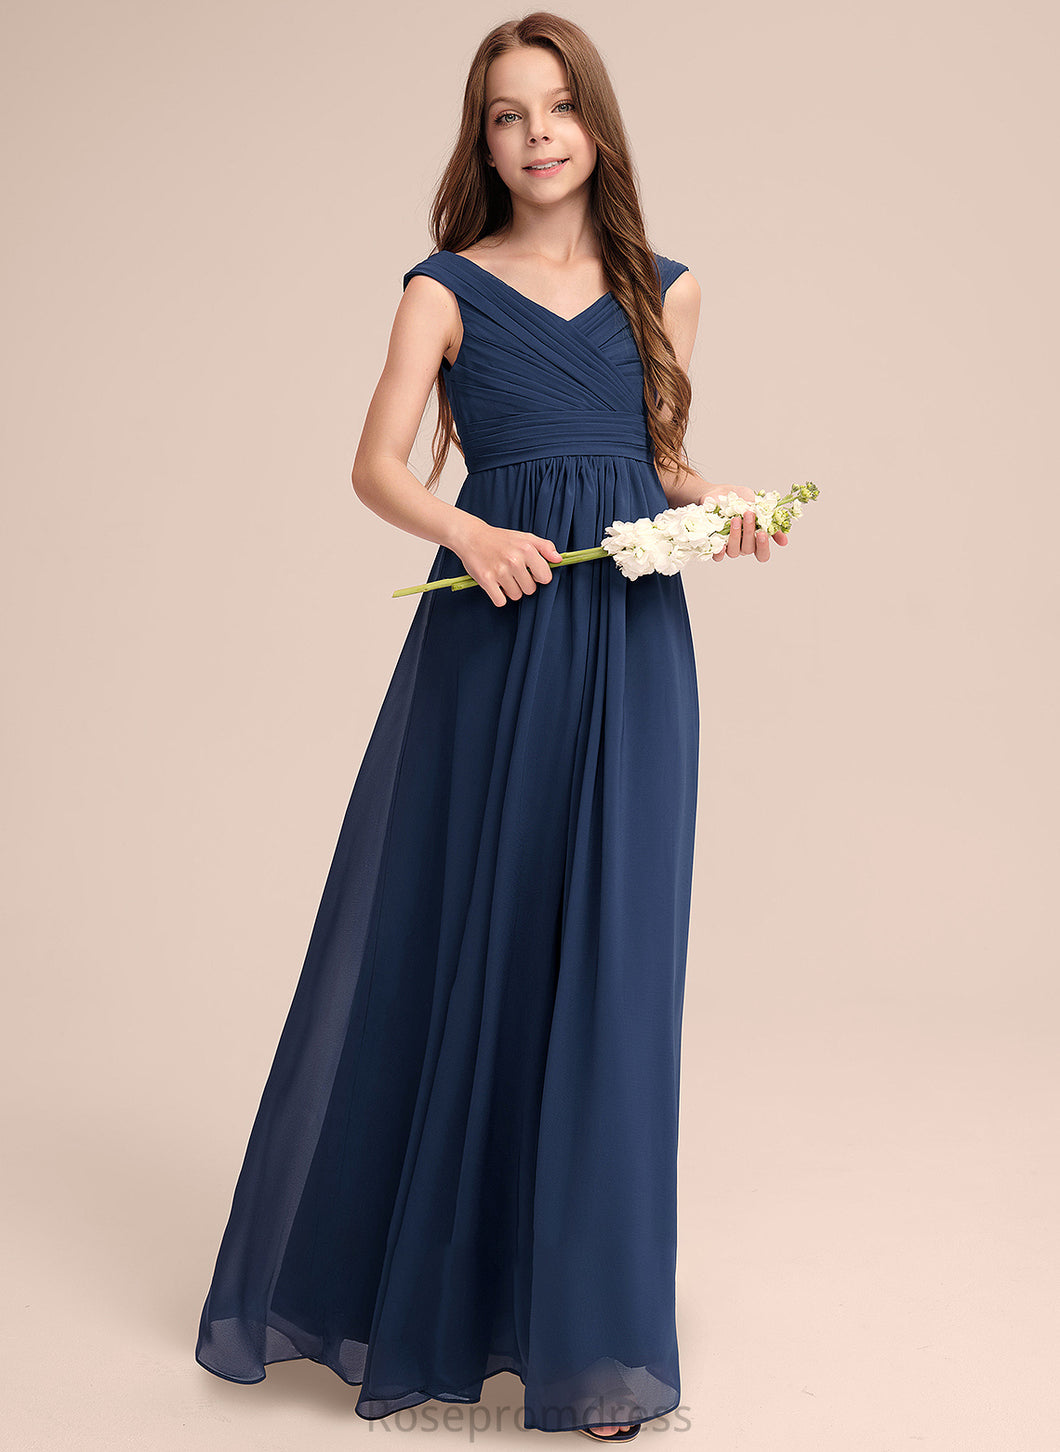 Off-the-Shoulder With Junior Bridesmaid Dresses Chiffon Cristal Ruffles A-Line Floor-Length